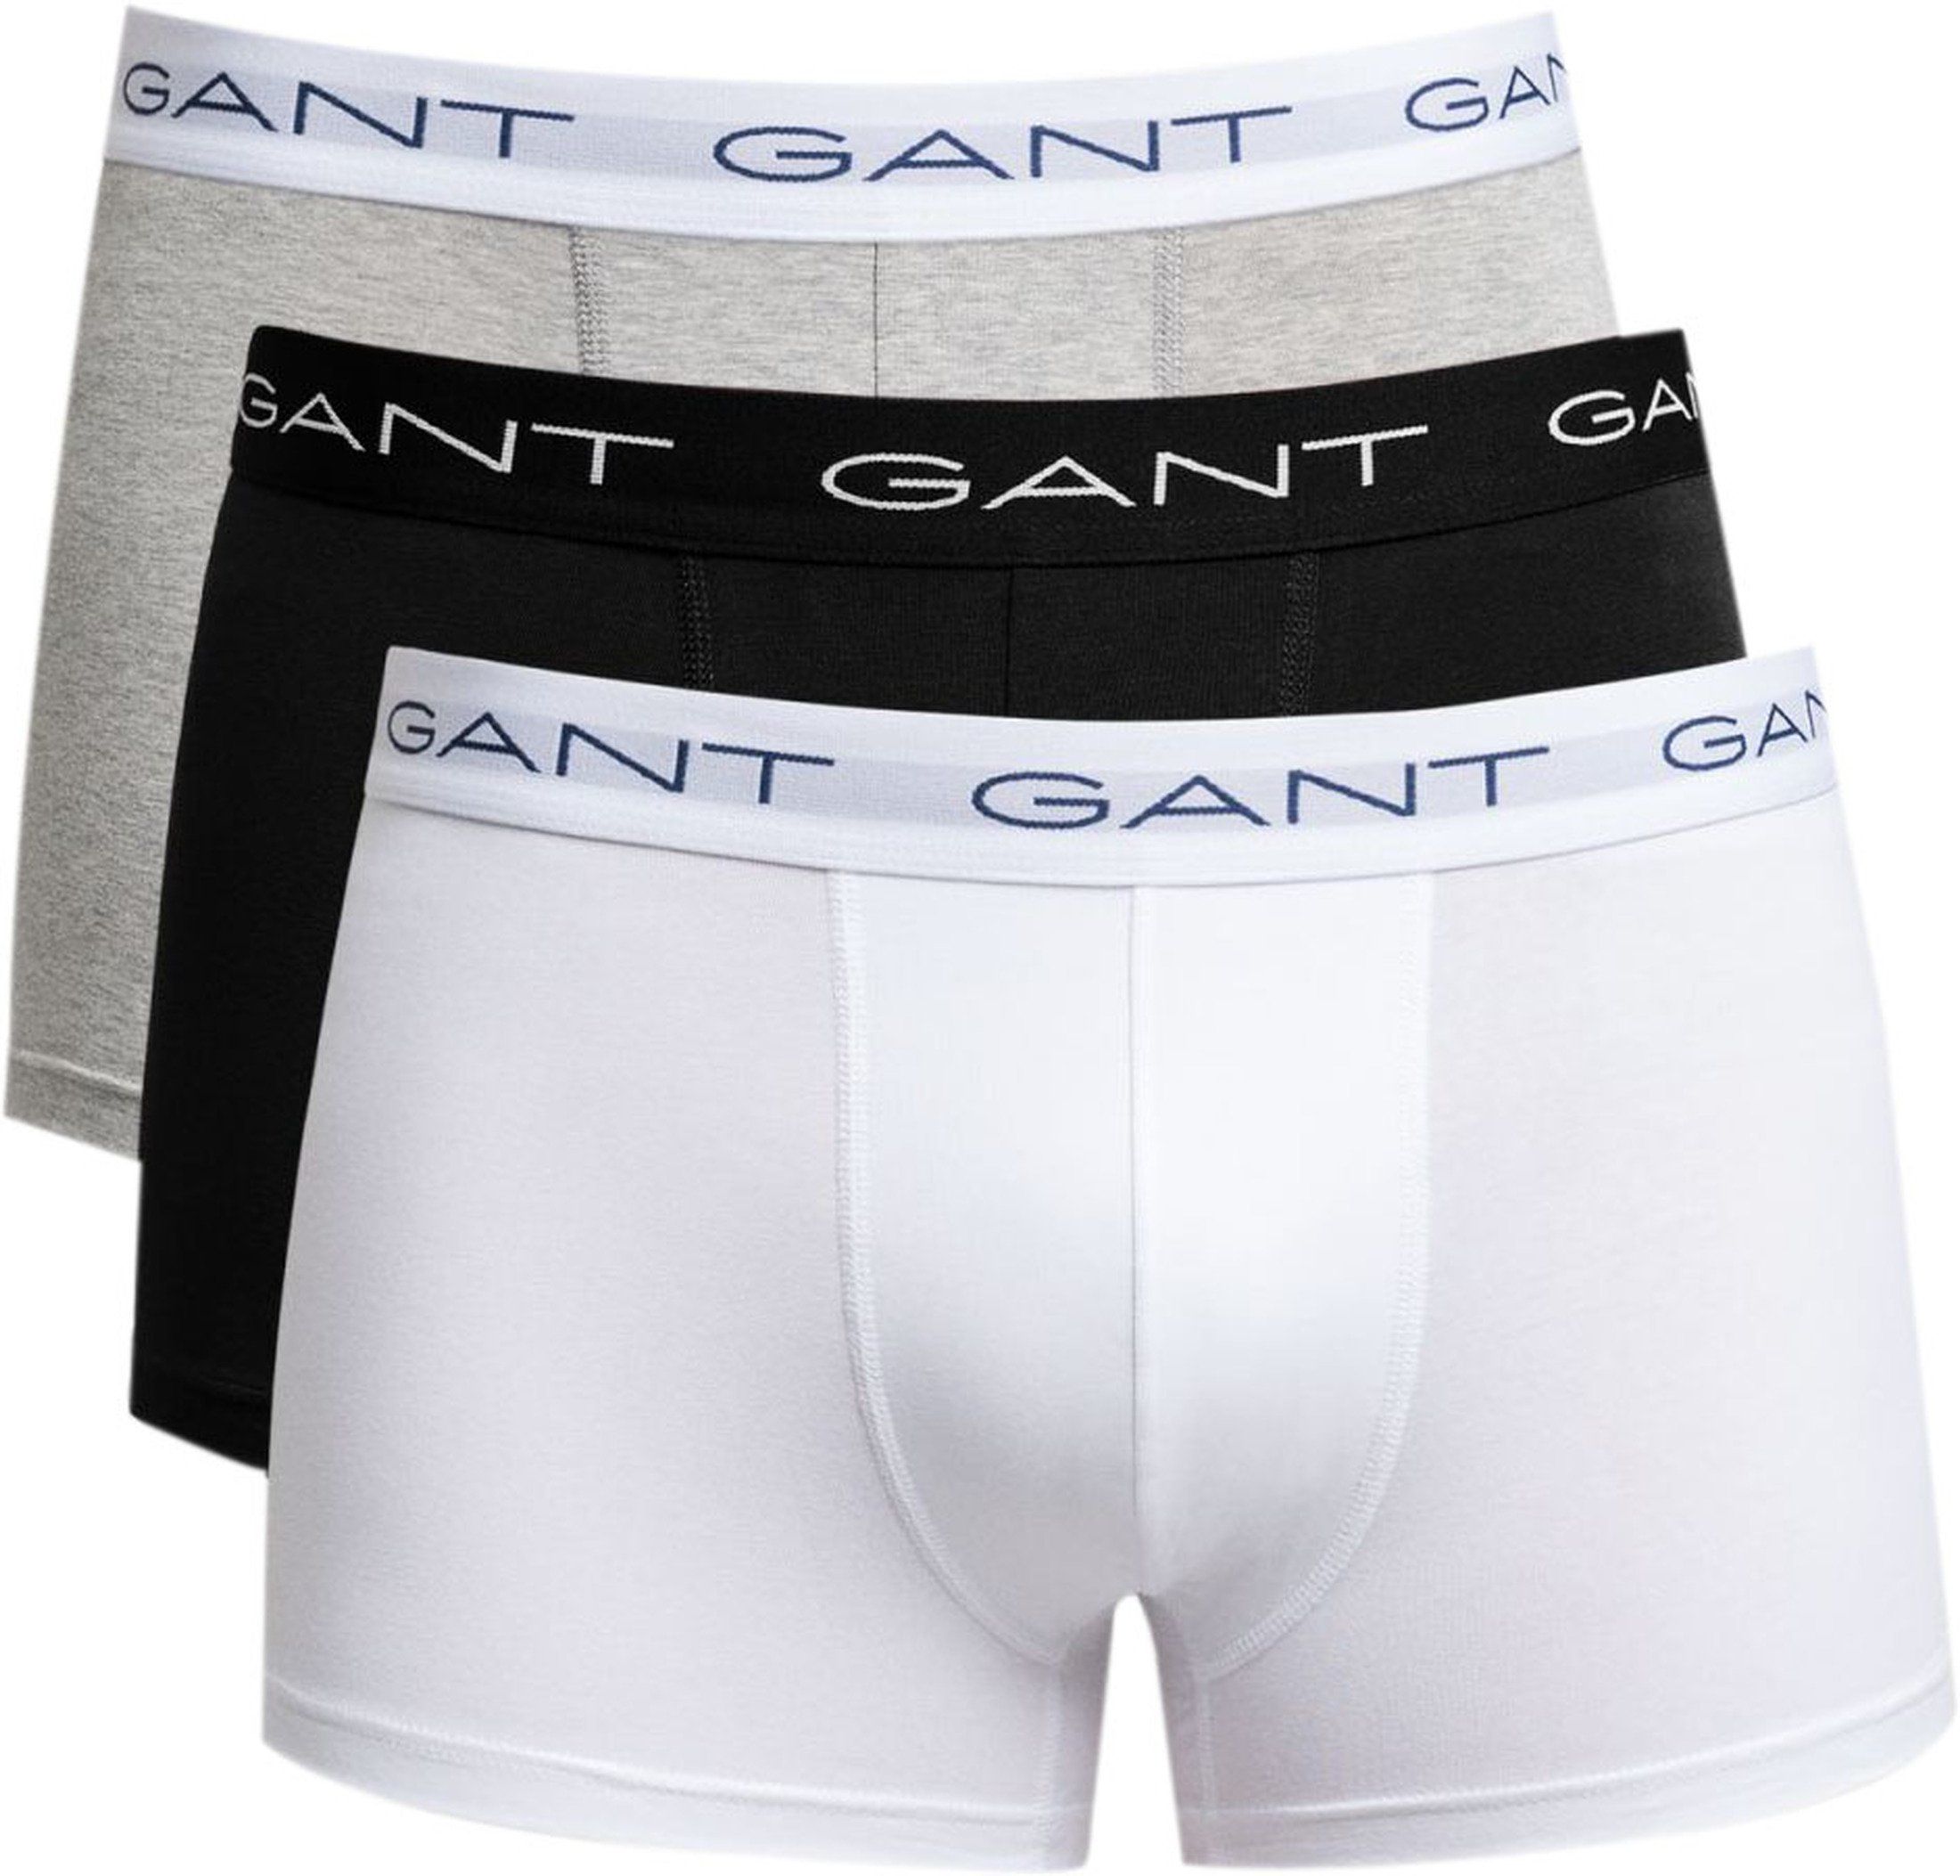 Gant Boxers 3-Pack Trunk Multicolor Black White Grey size M